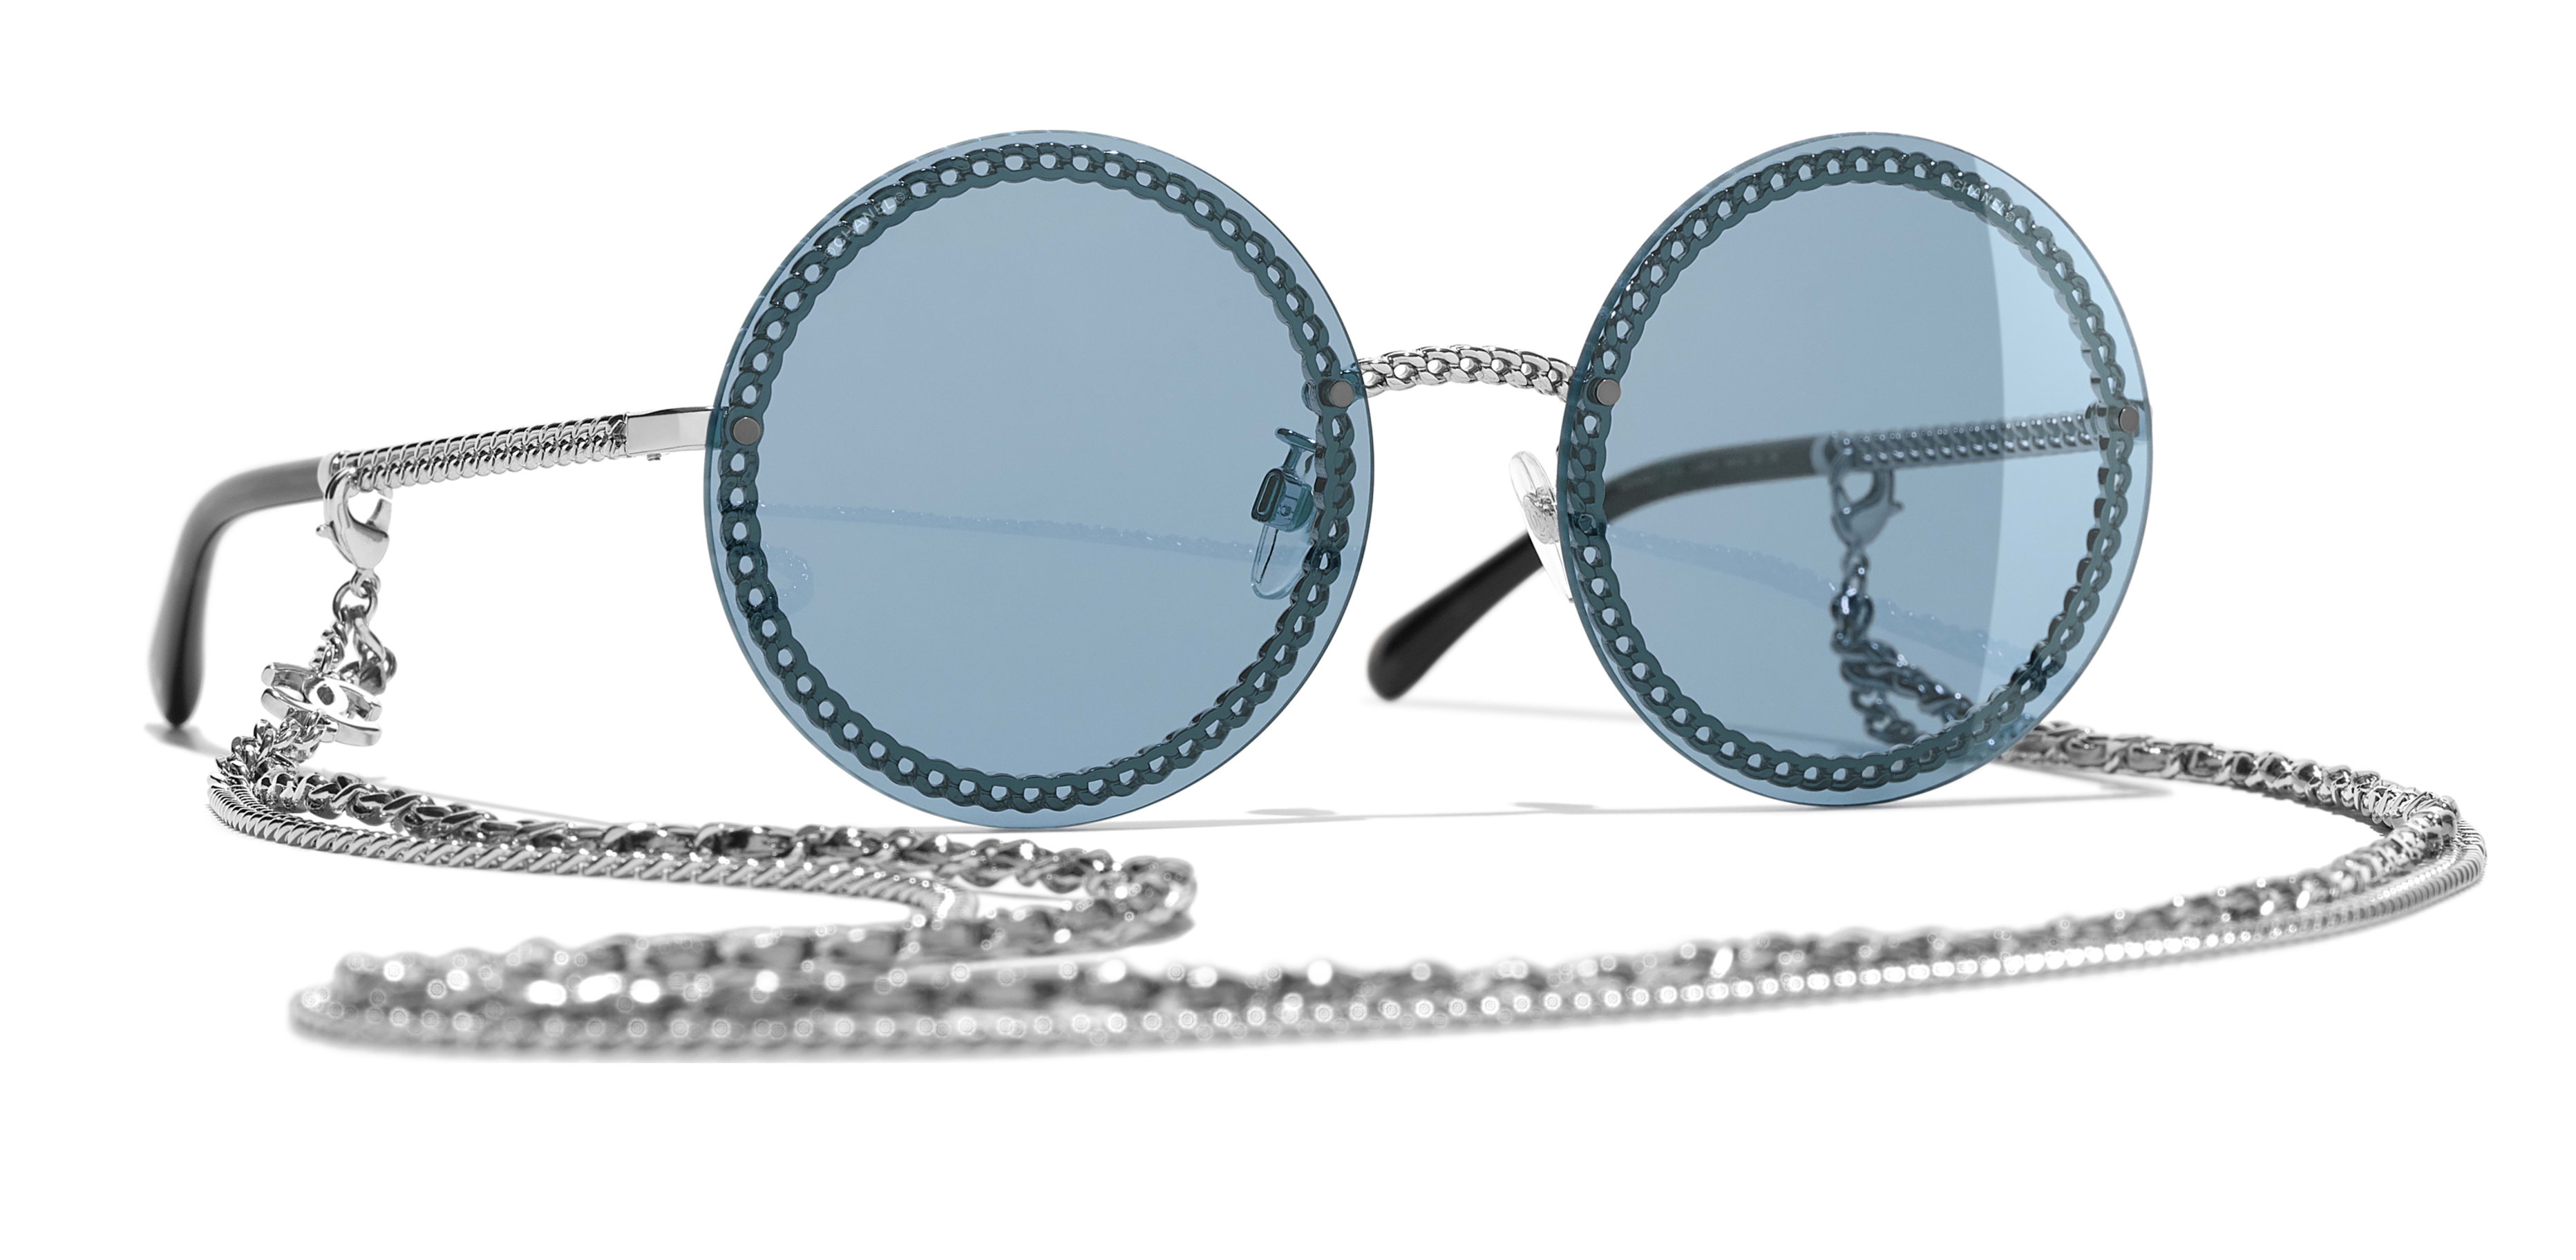 Chanel 5511 Sunglasses (Blue/Grey - Round - Women)